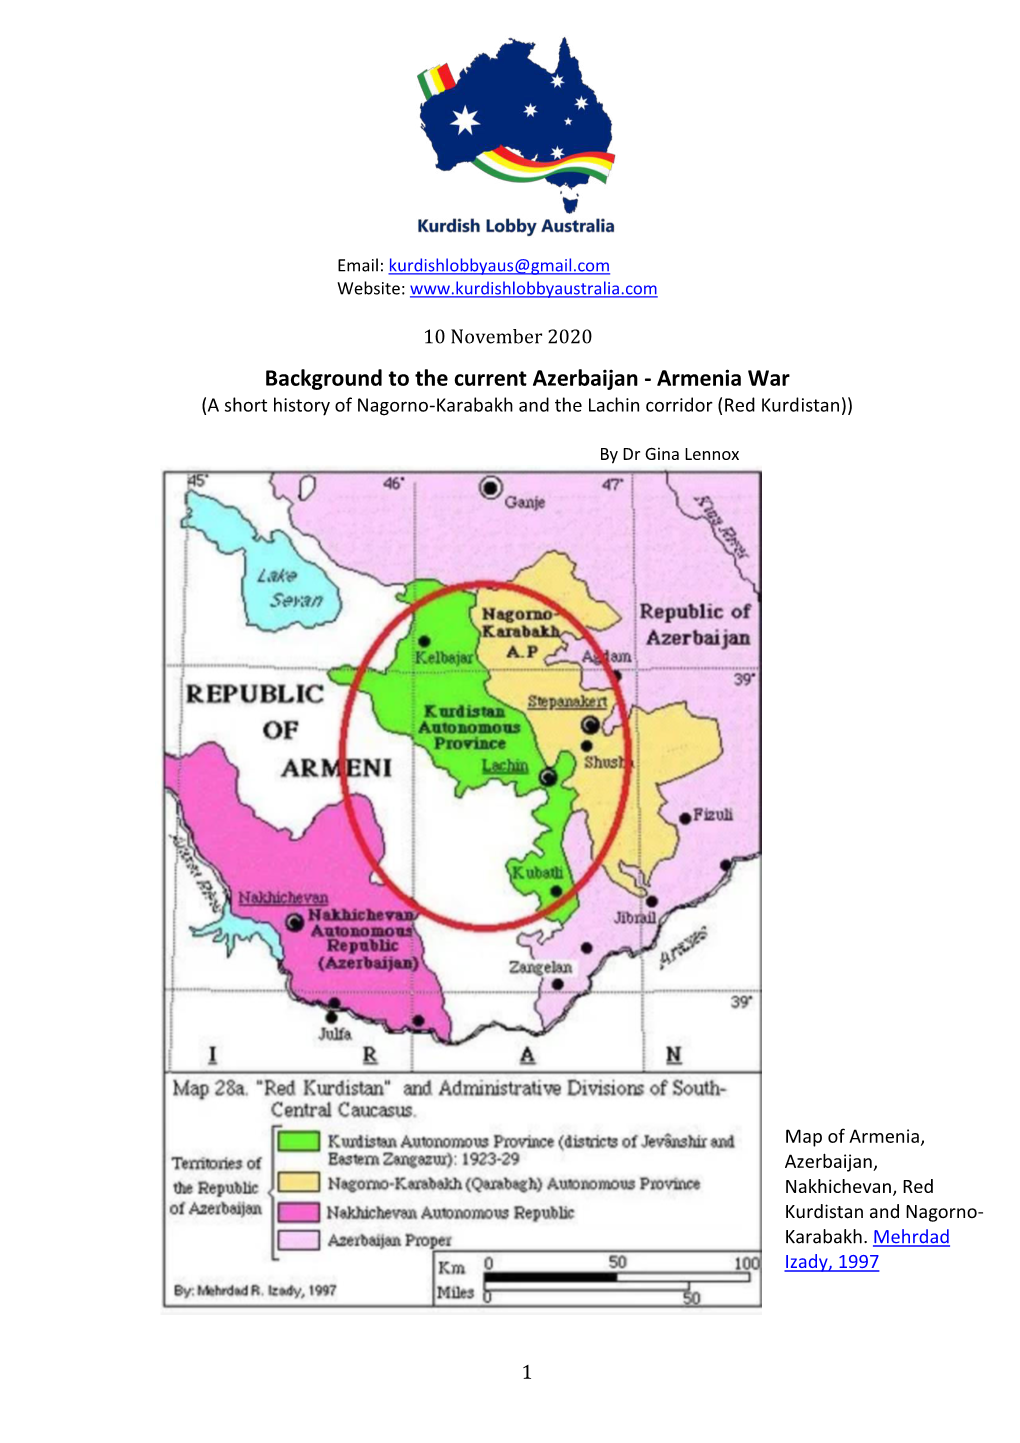 Background to the Current Azerbaijan - Armenia War (A Short History of Nagorno-Karabakh and the Lachin Corridor (Red Kurdistan))